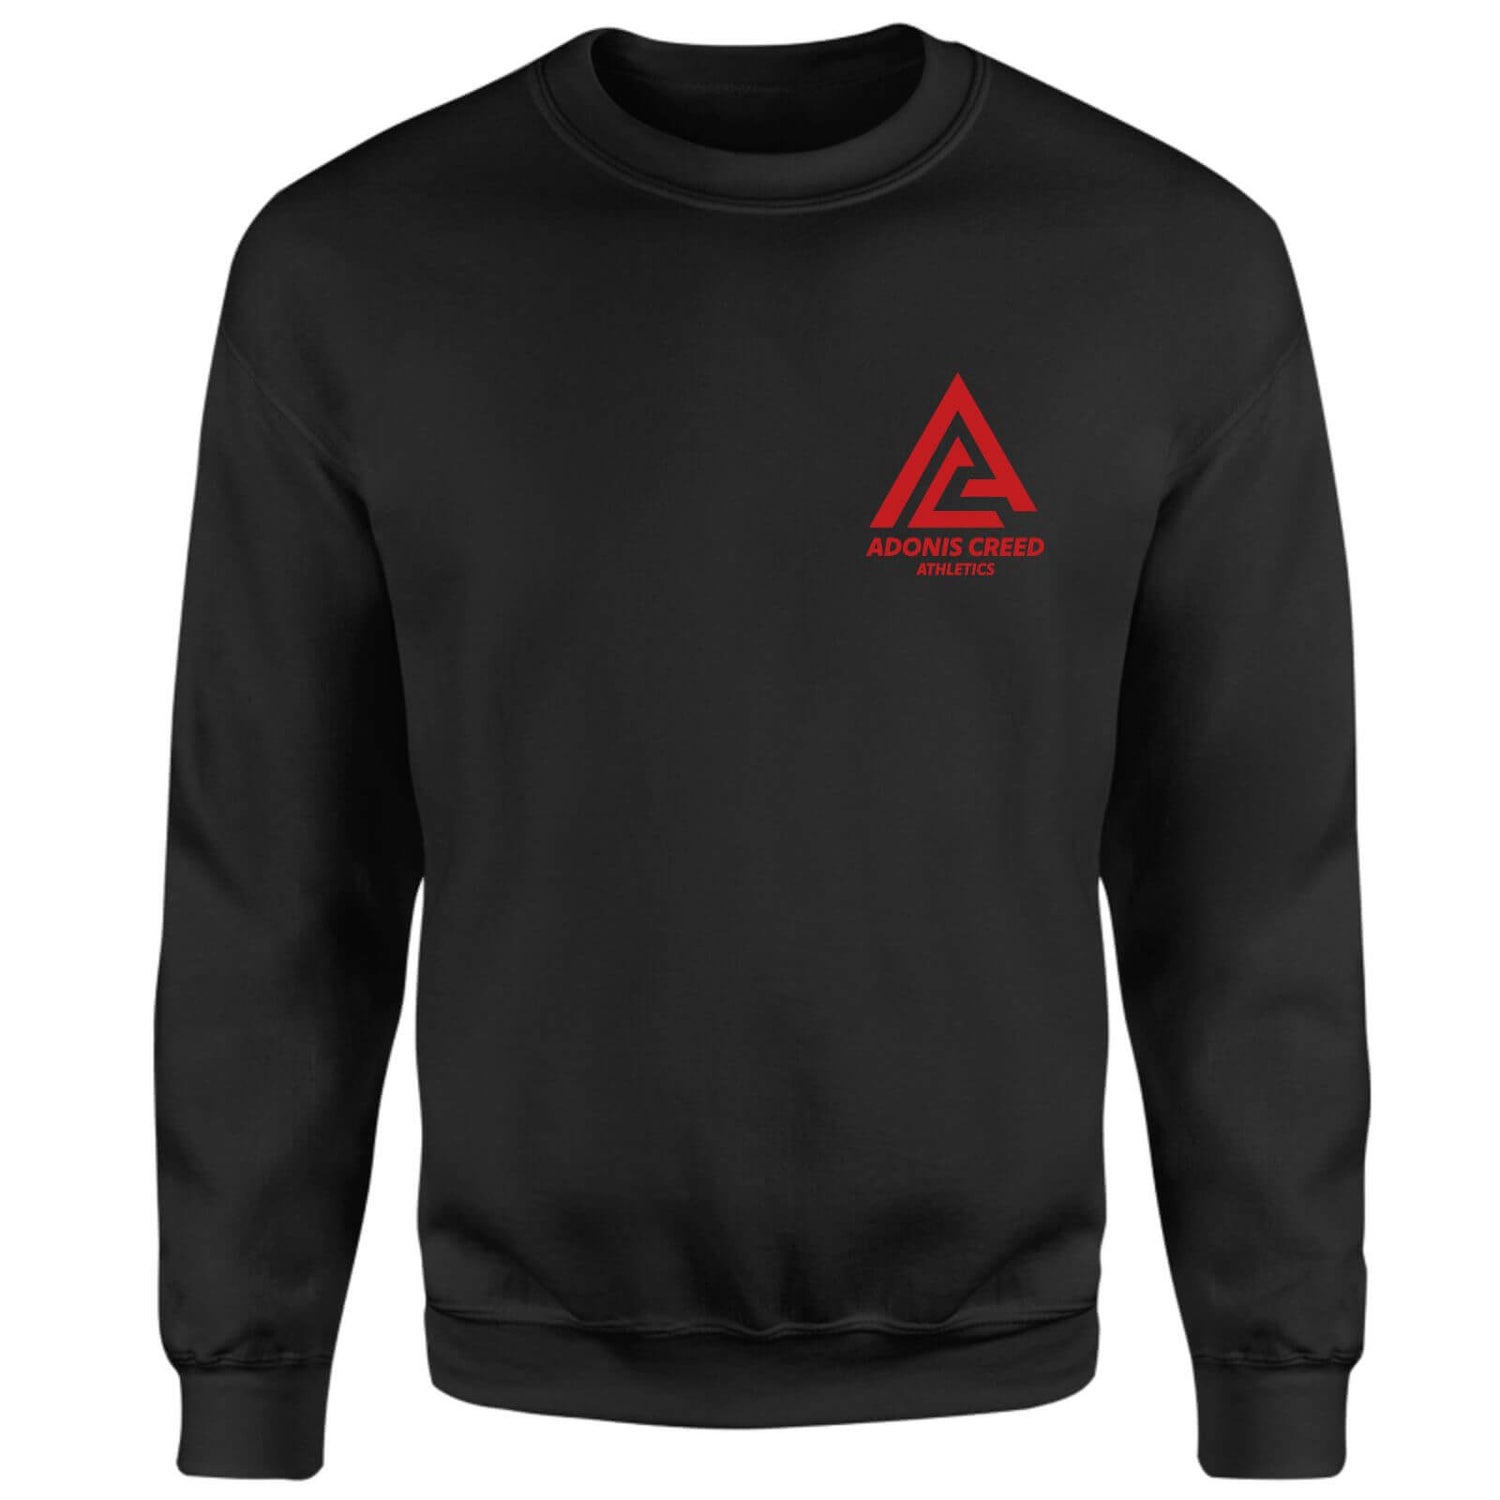 Creed Adonis Creed Athletics Logo Sweatshirt - Black - XS